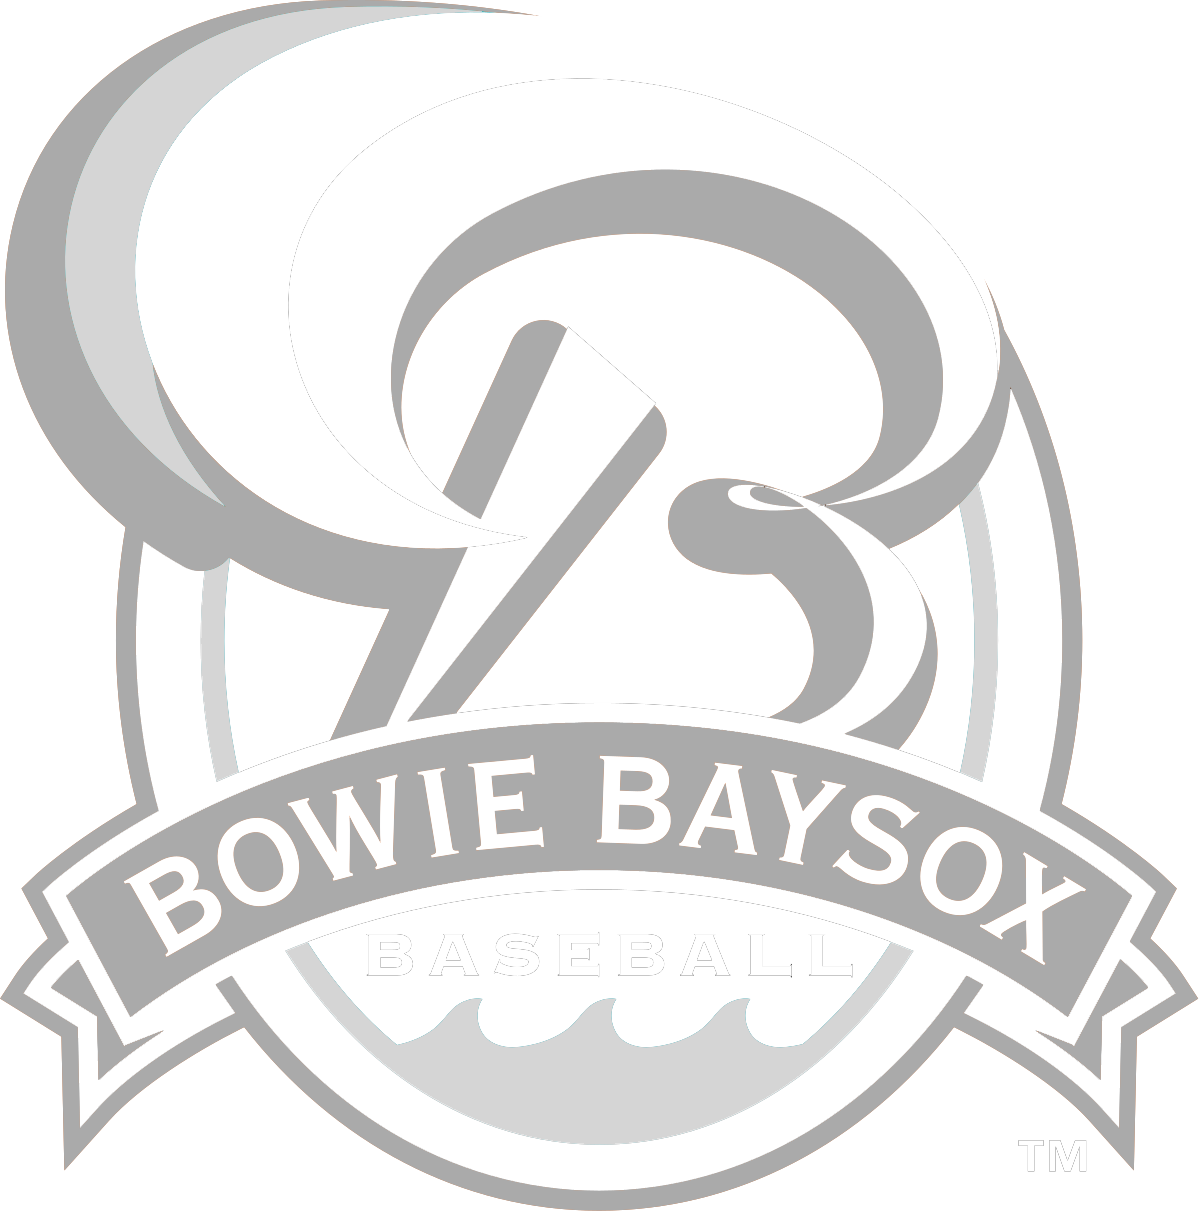 Bowie Baysox - Minor League Baseball